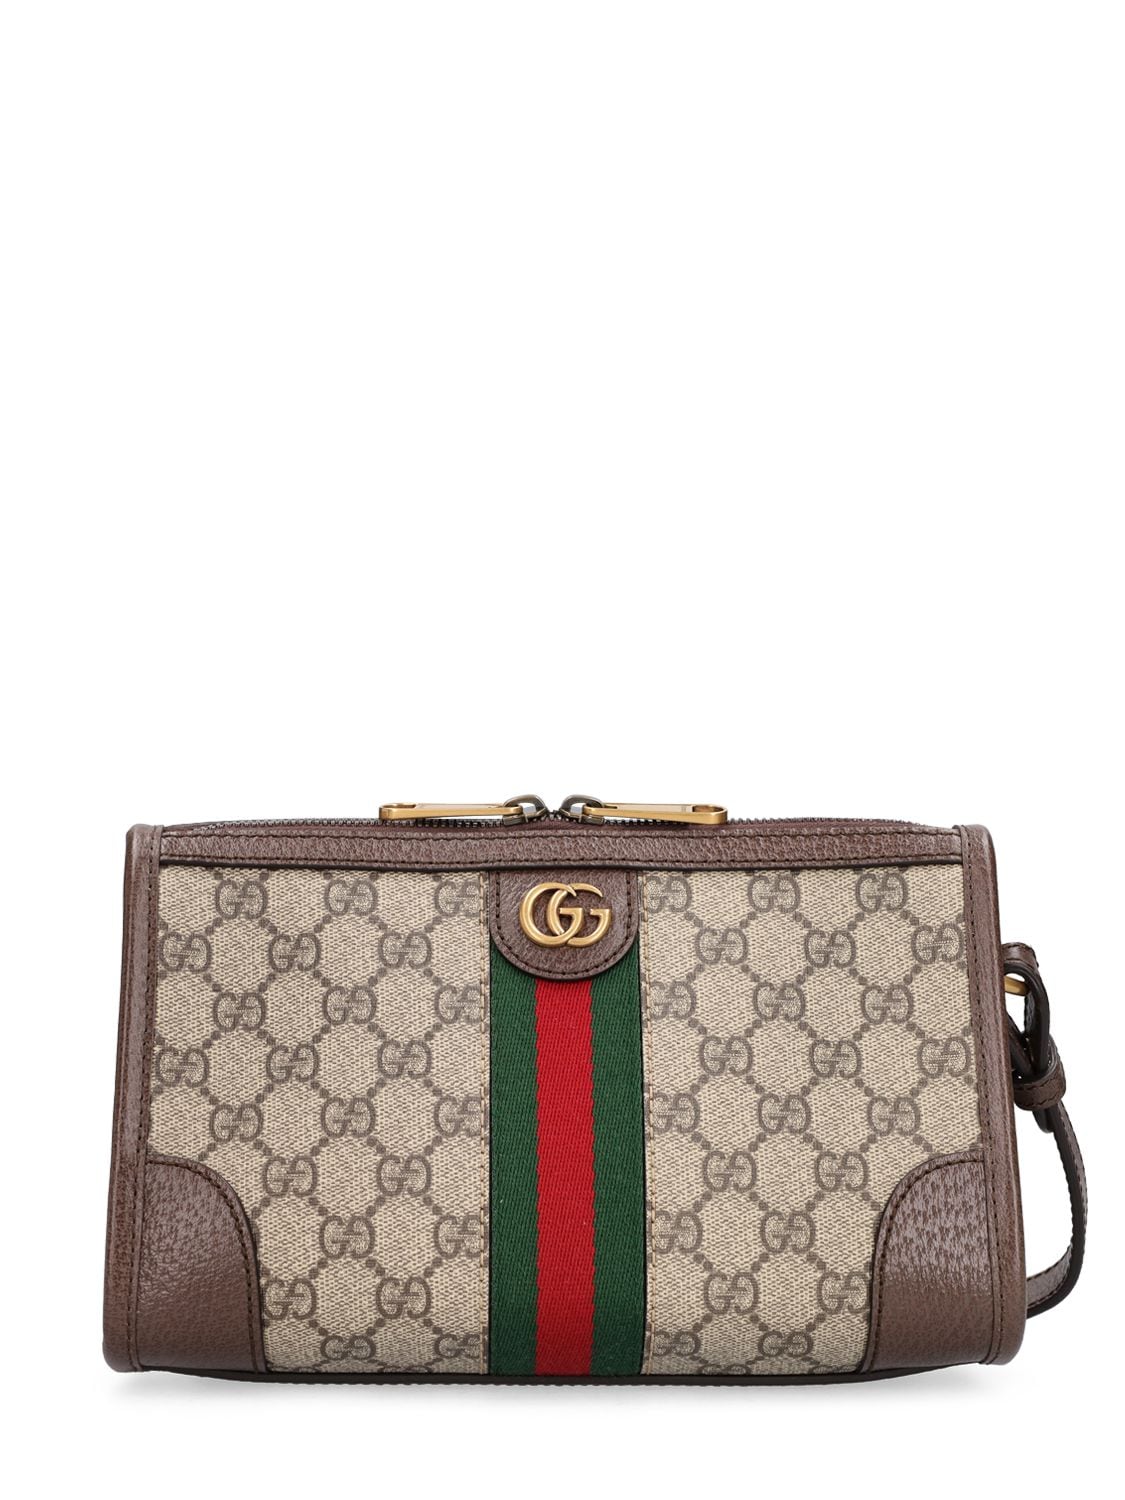 Gucci Gg Supreme Messenger Bag In Beige,ebony